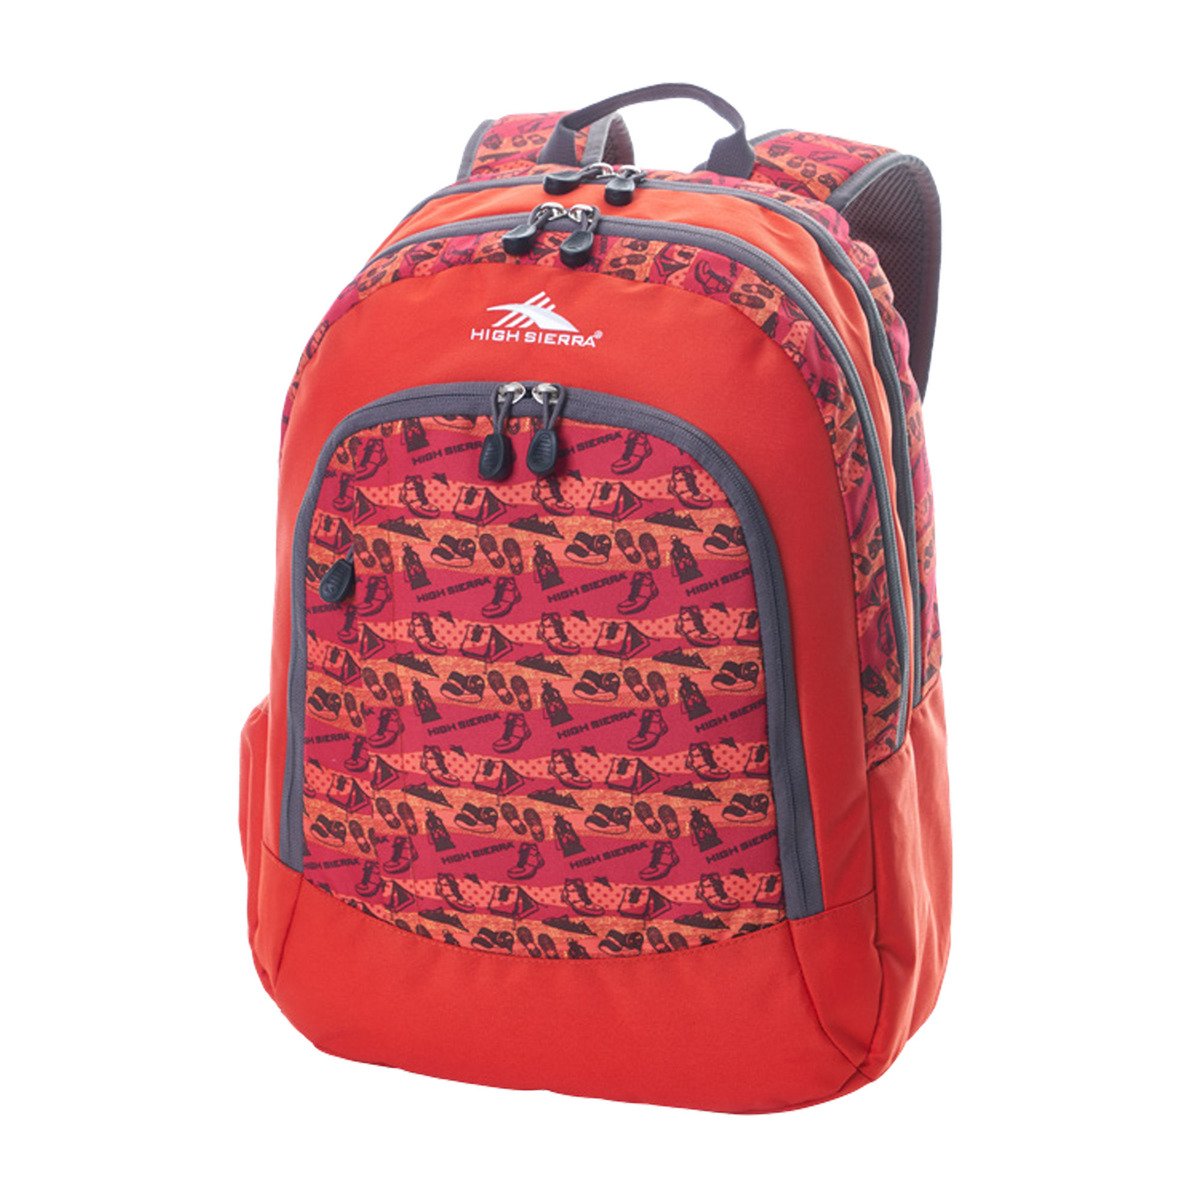 High Sierra School Backpack Assorted CO 001 16"